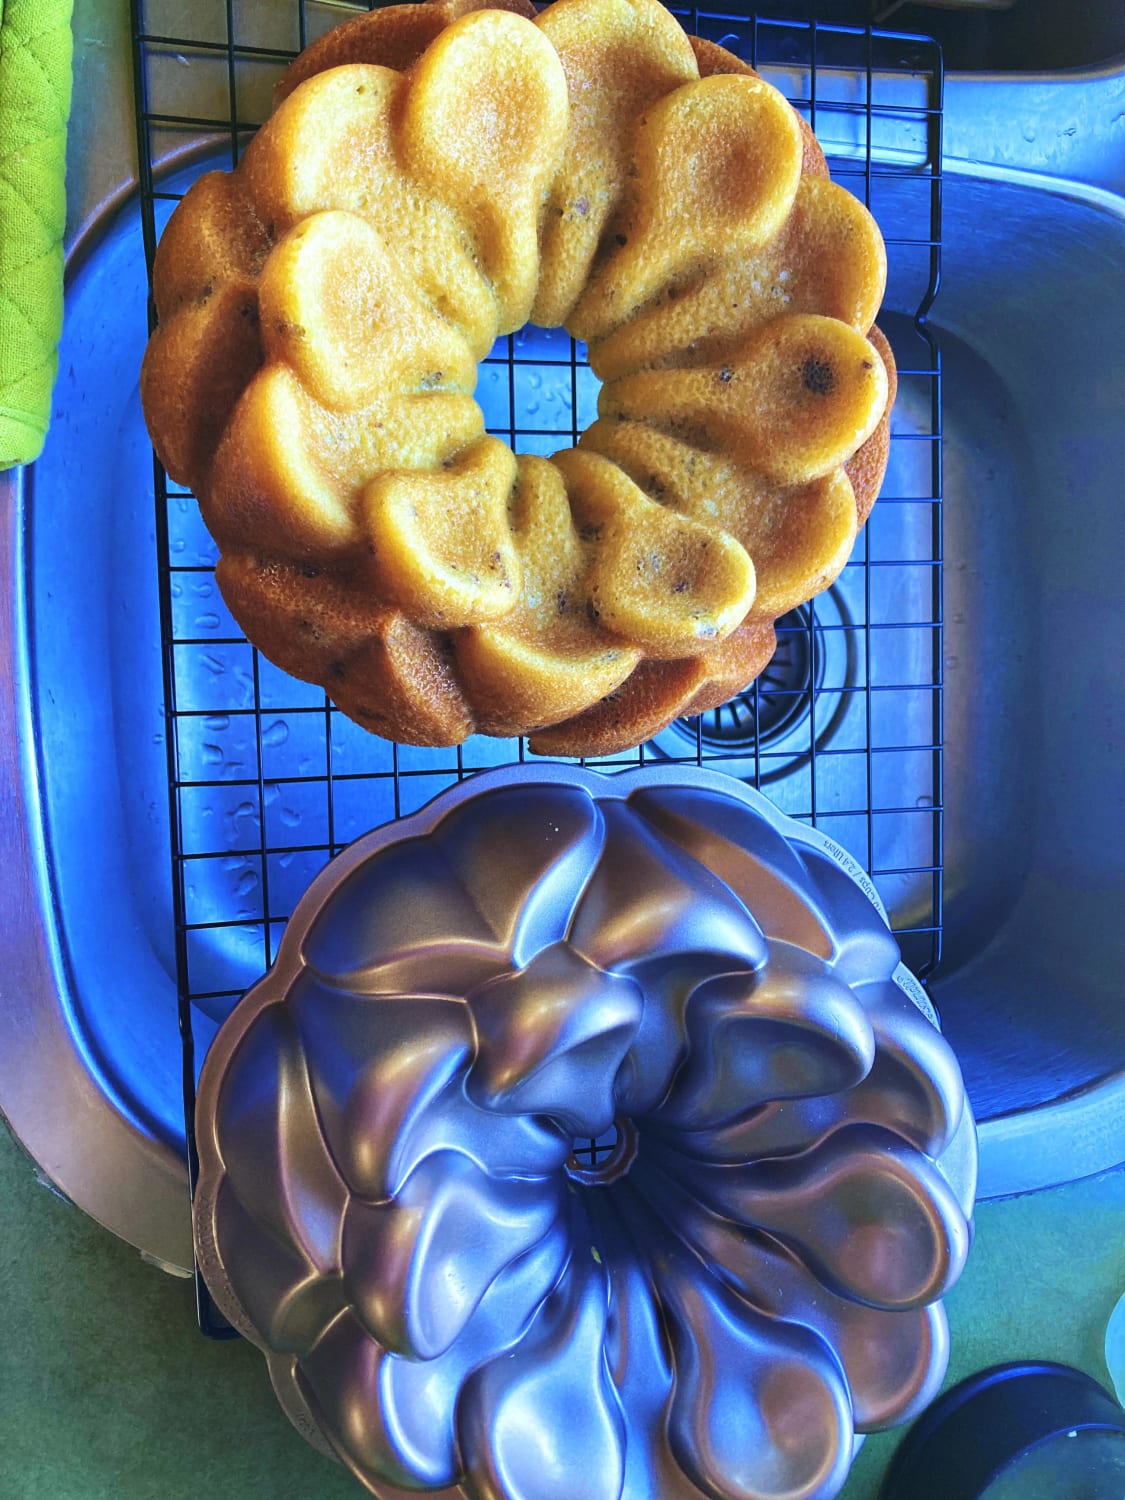 Kentucky butter Bundt cake (with pecans) in my new magnolia design pan